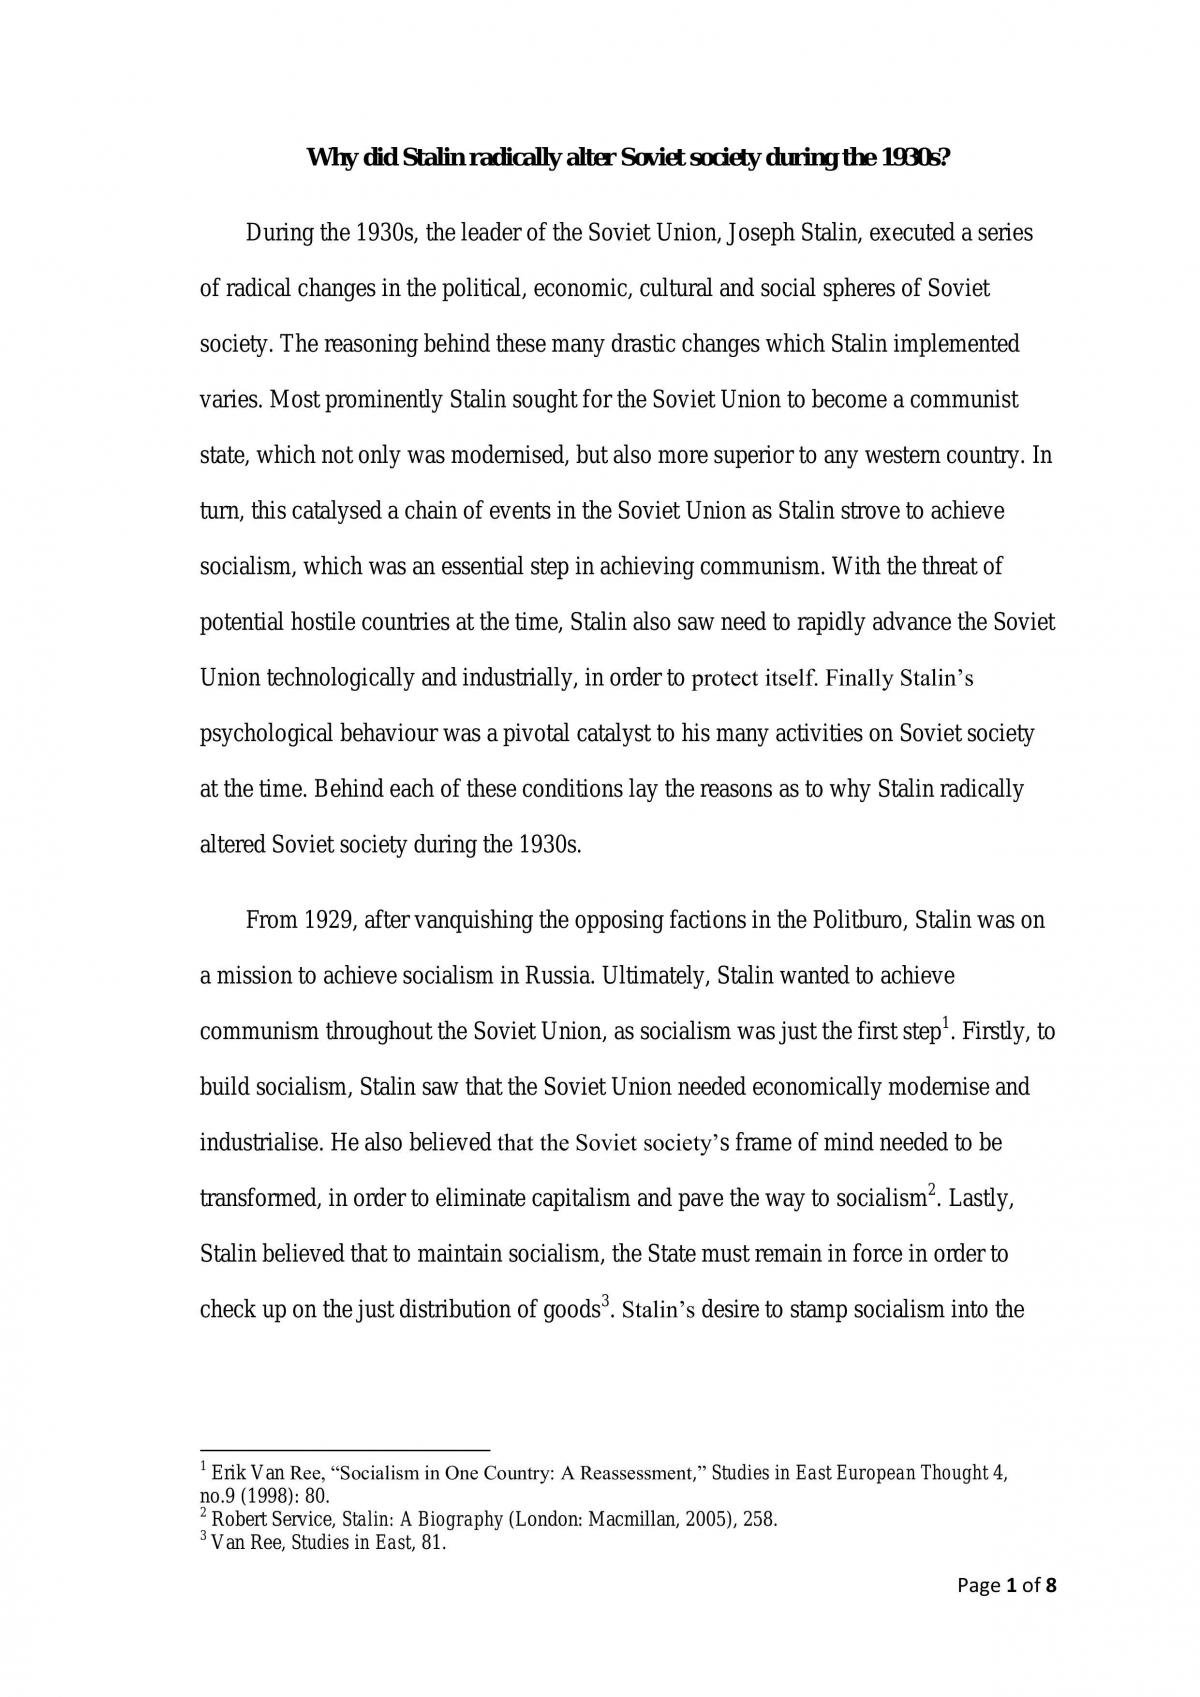 Major Essay - Stalin & Soviet Society - Page 1